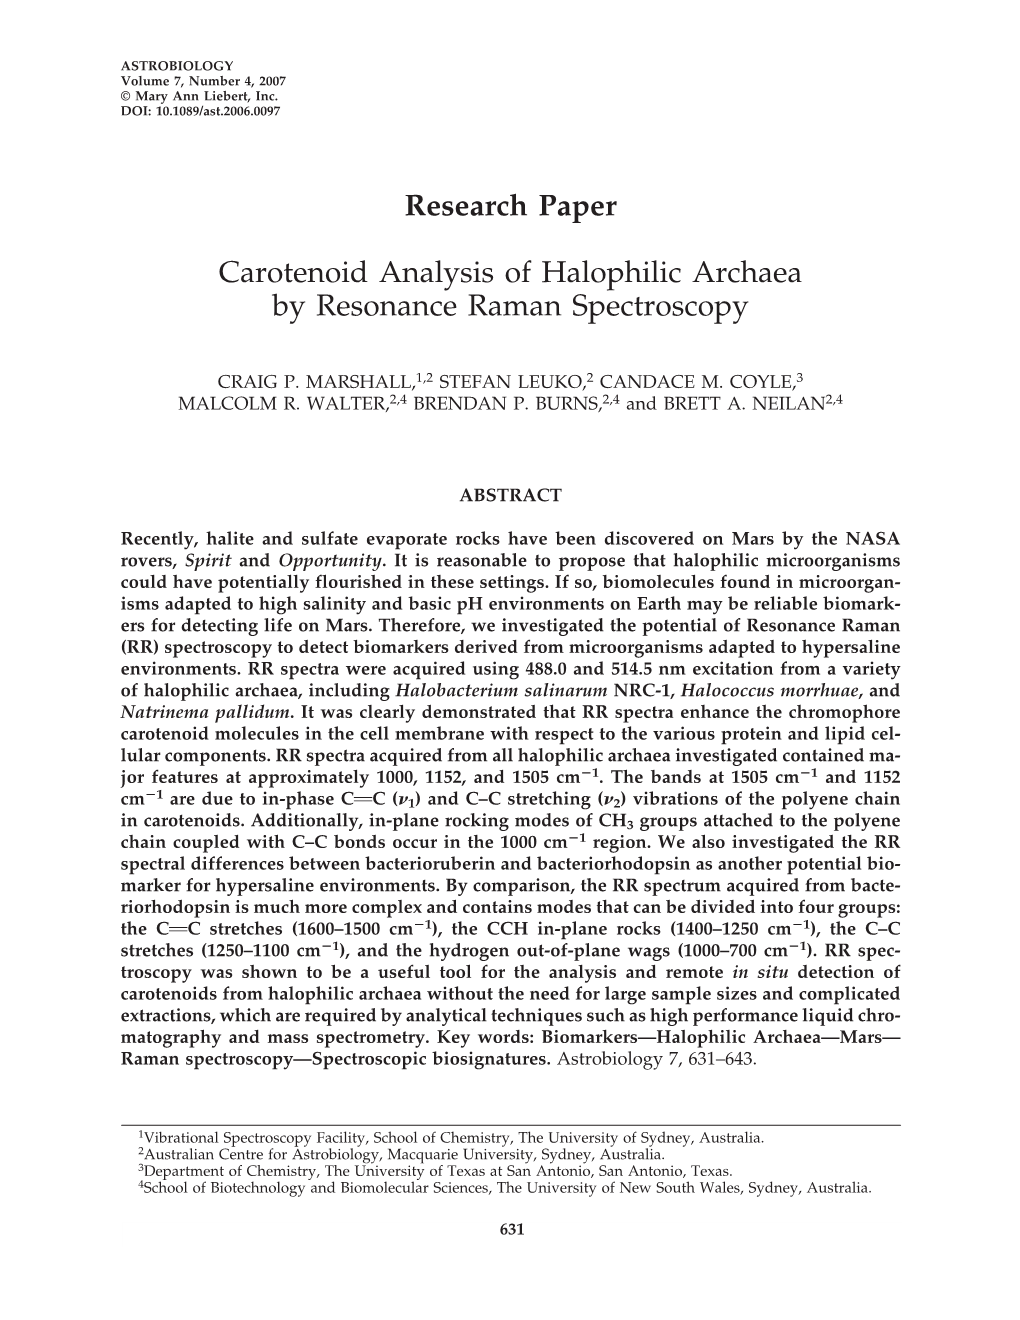 Carotenoid Analysis of Halophilic Archaea by Resonance Raman Spectroscopy